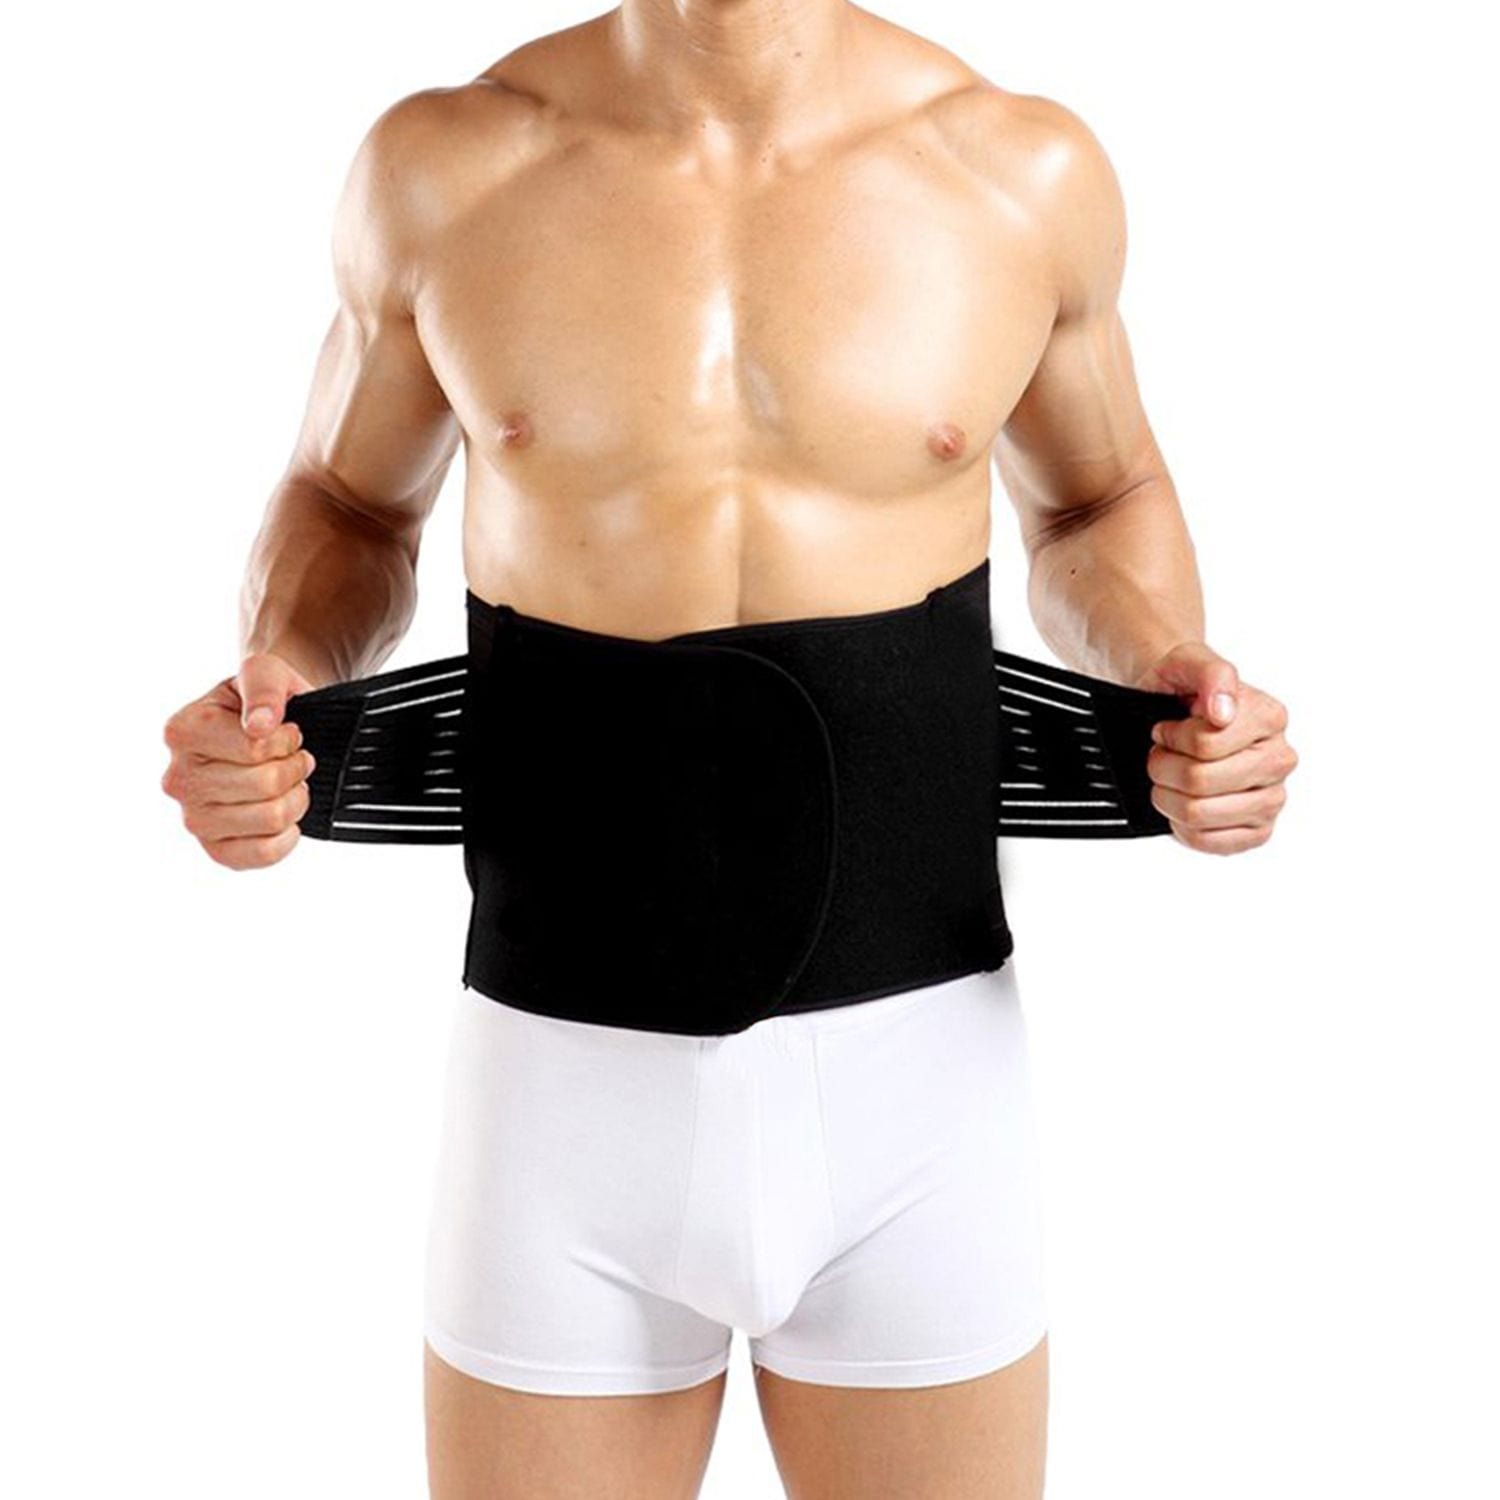 Extreme Fit - Double-Compression Waist Slimming Belt - Compression Belt